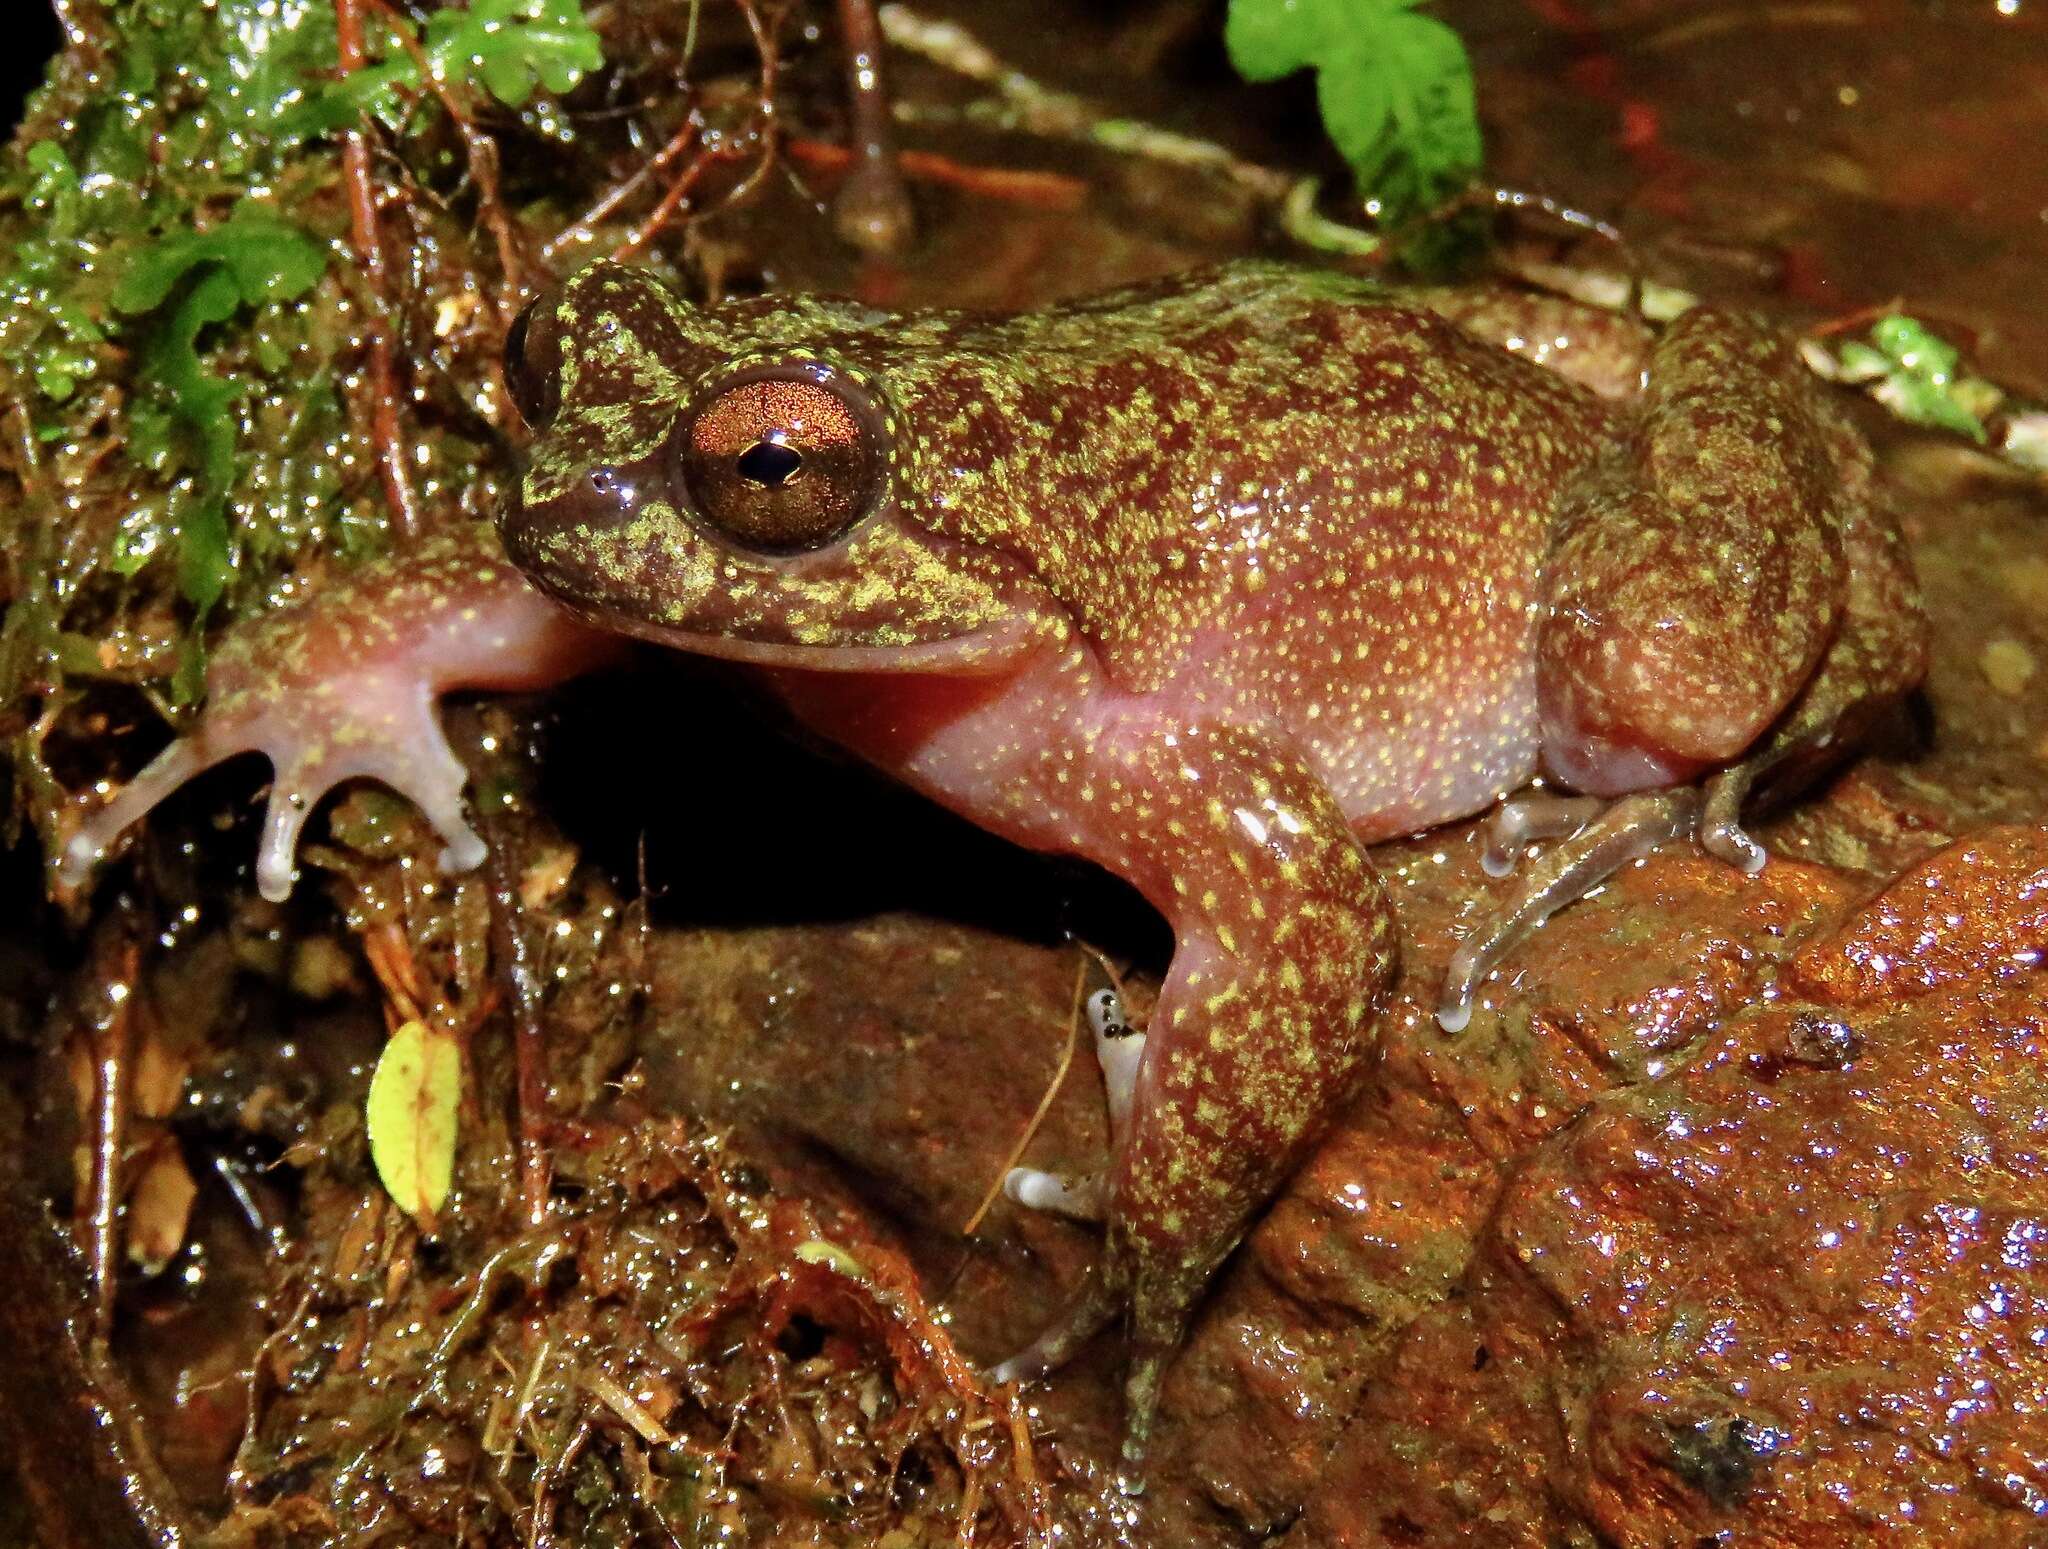 Image of Barrio's Frog